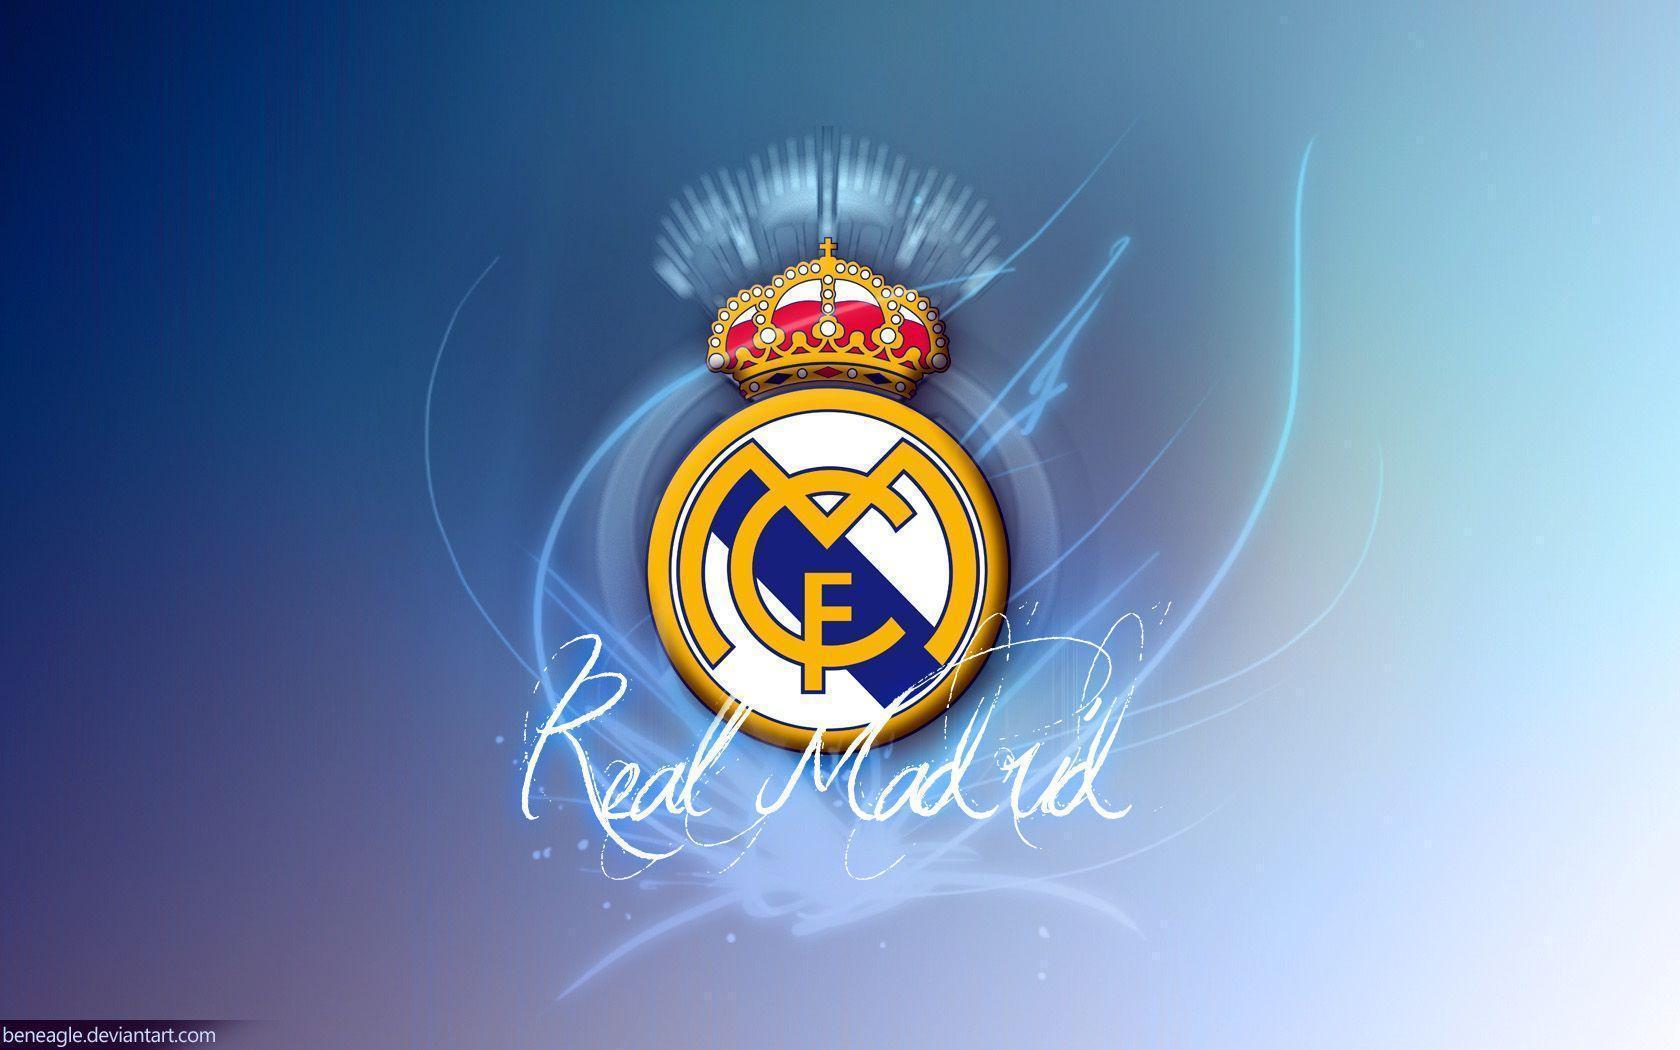 Real Madrid Logo Wallpaper HD 2015